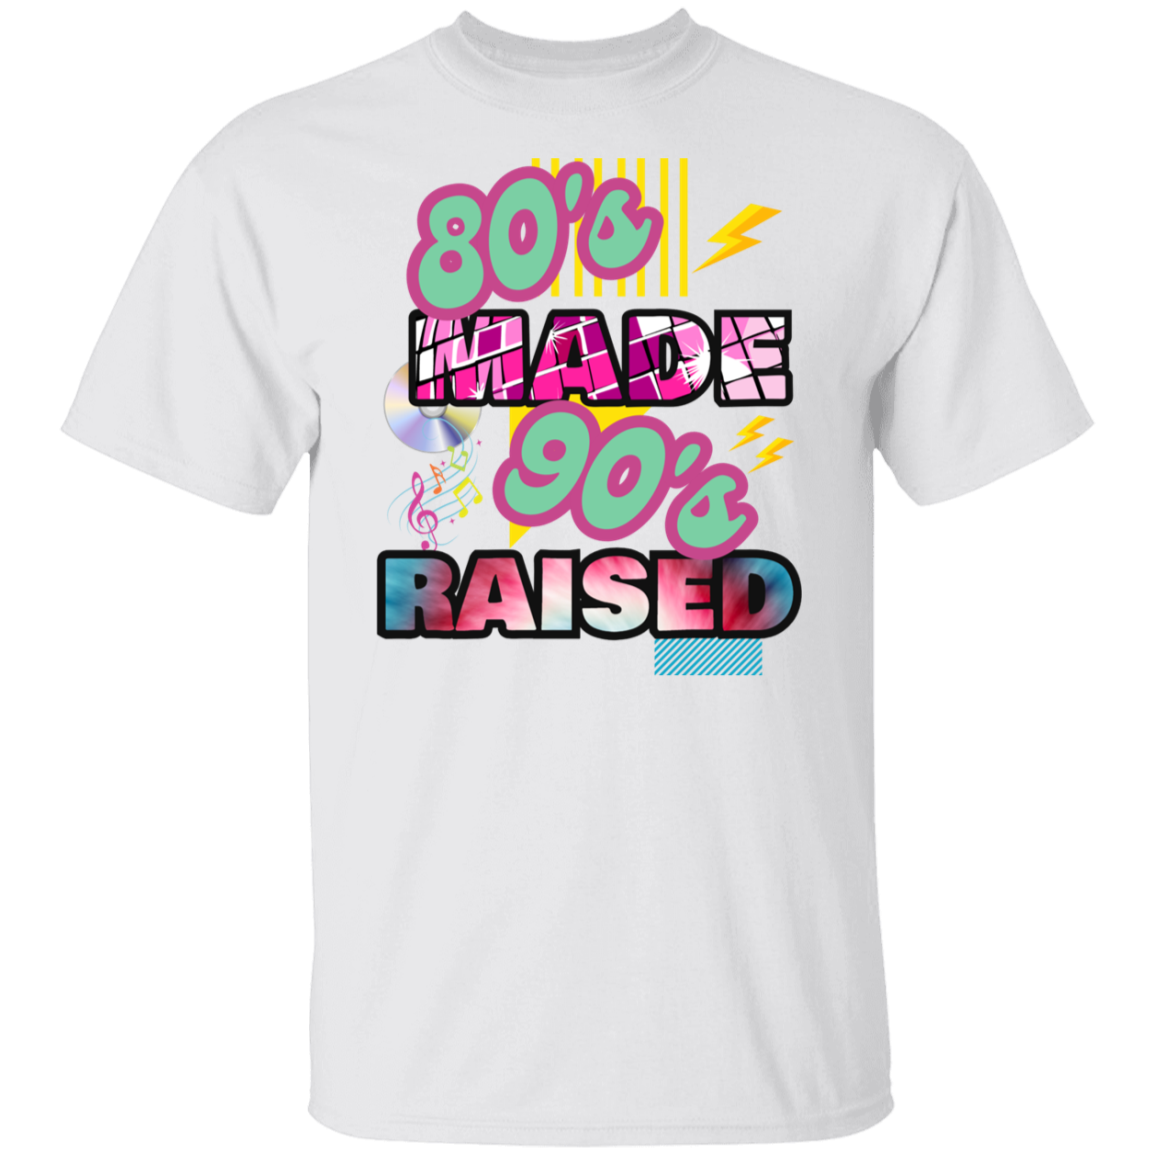 80'S MADE 90'S RAISED  5.3 oz. T-Shirt